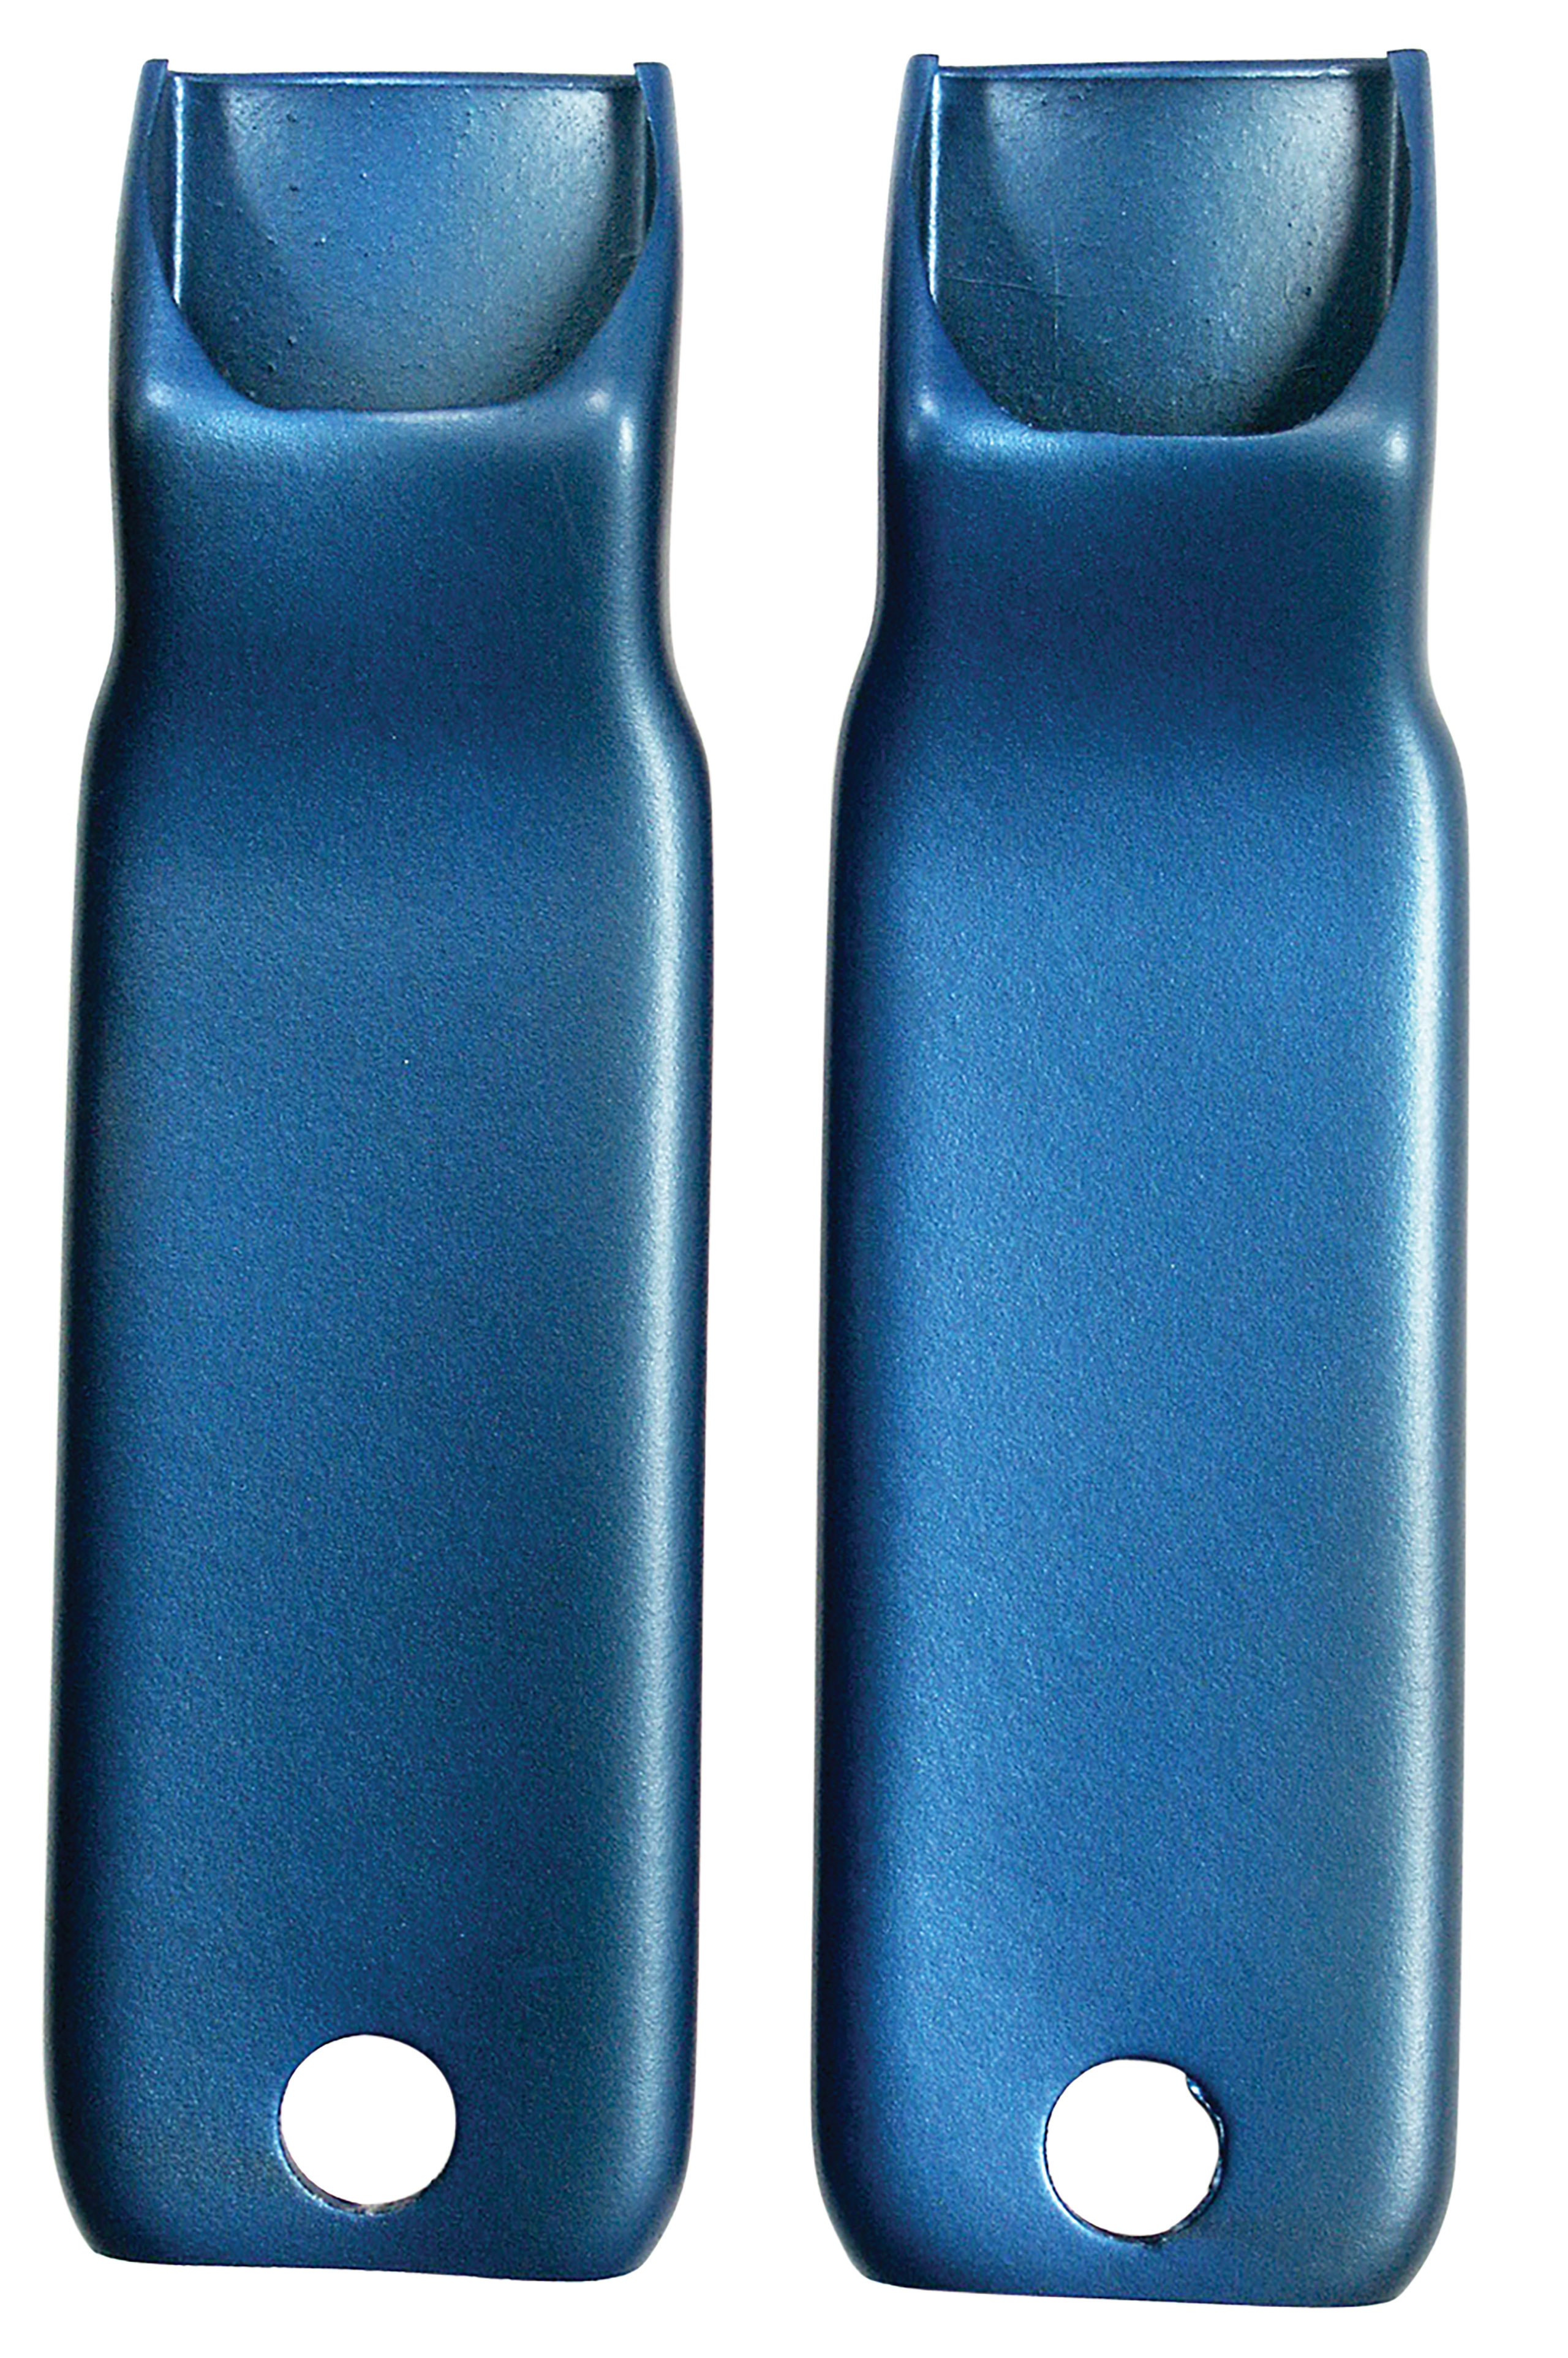 C3 1970 Chevrolet Corvette Seat Belt Inner Sleeve Kit - Bright Blue - Auto Accessories of America